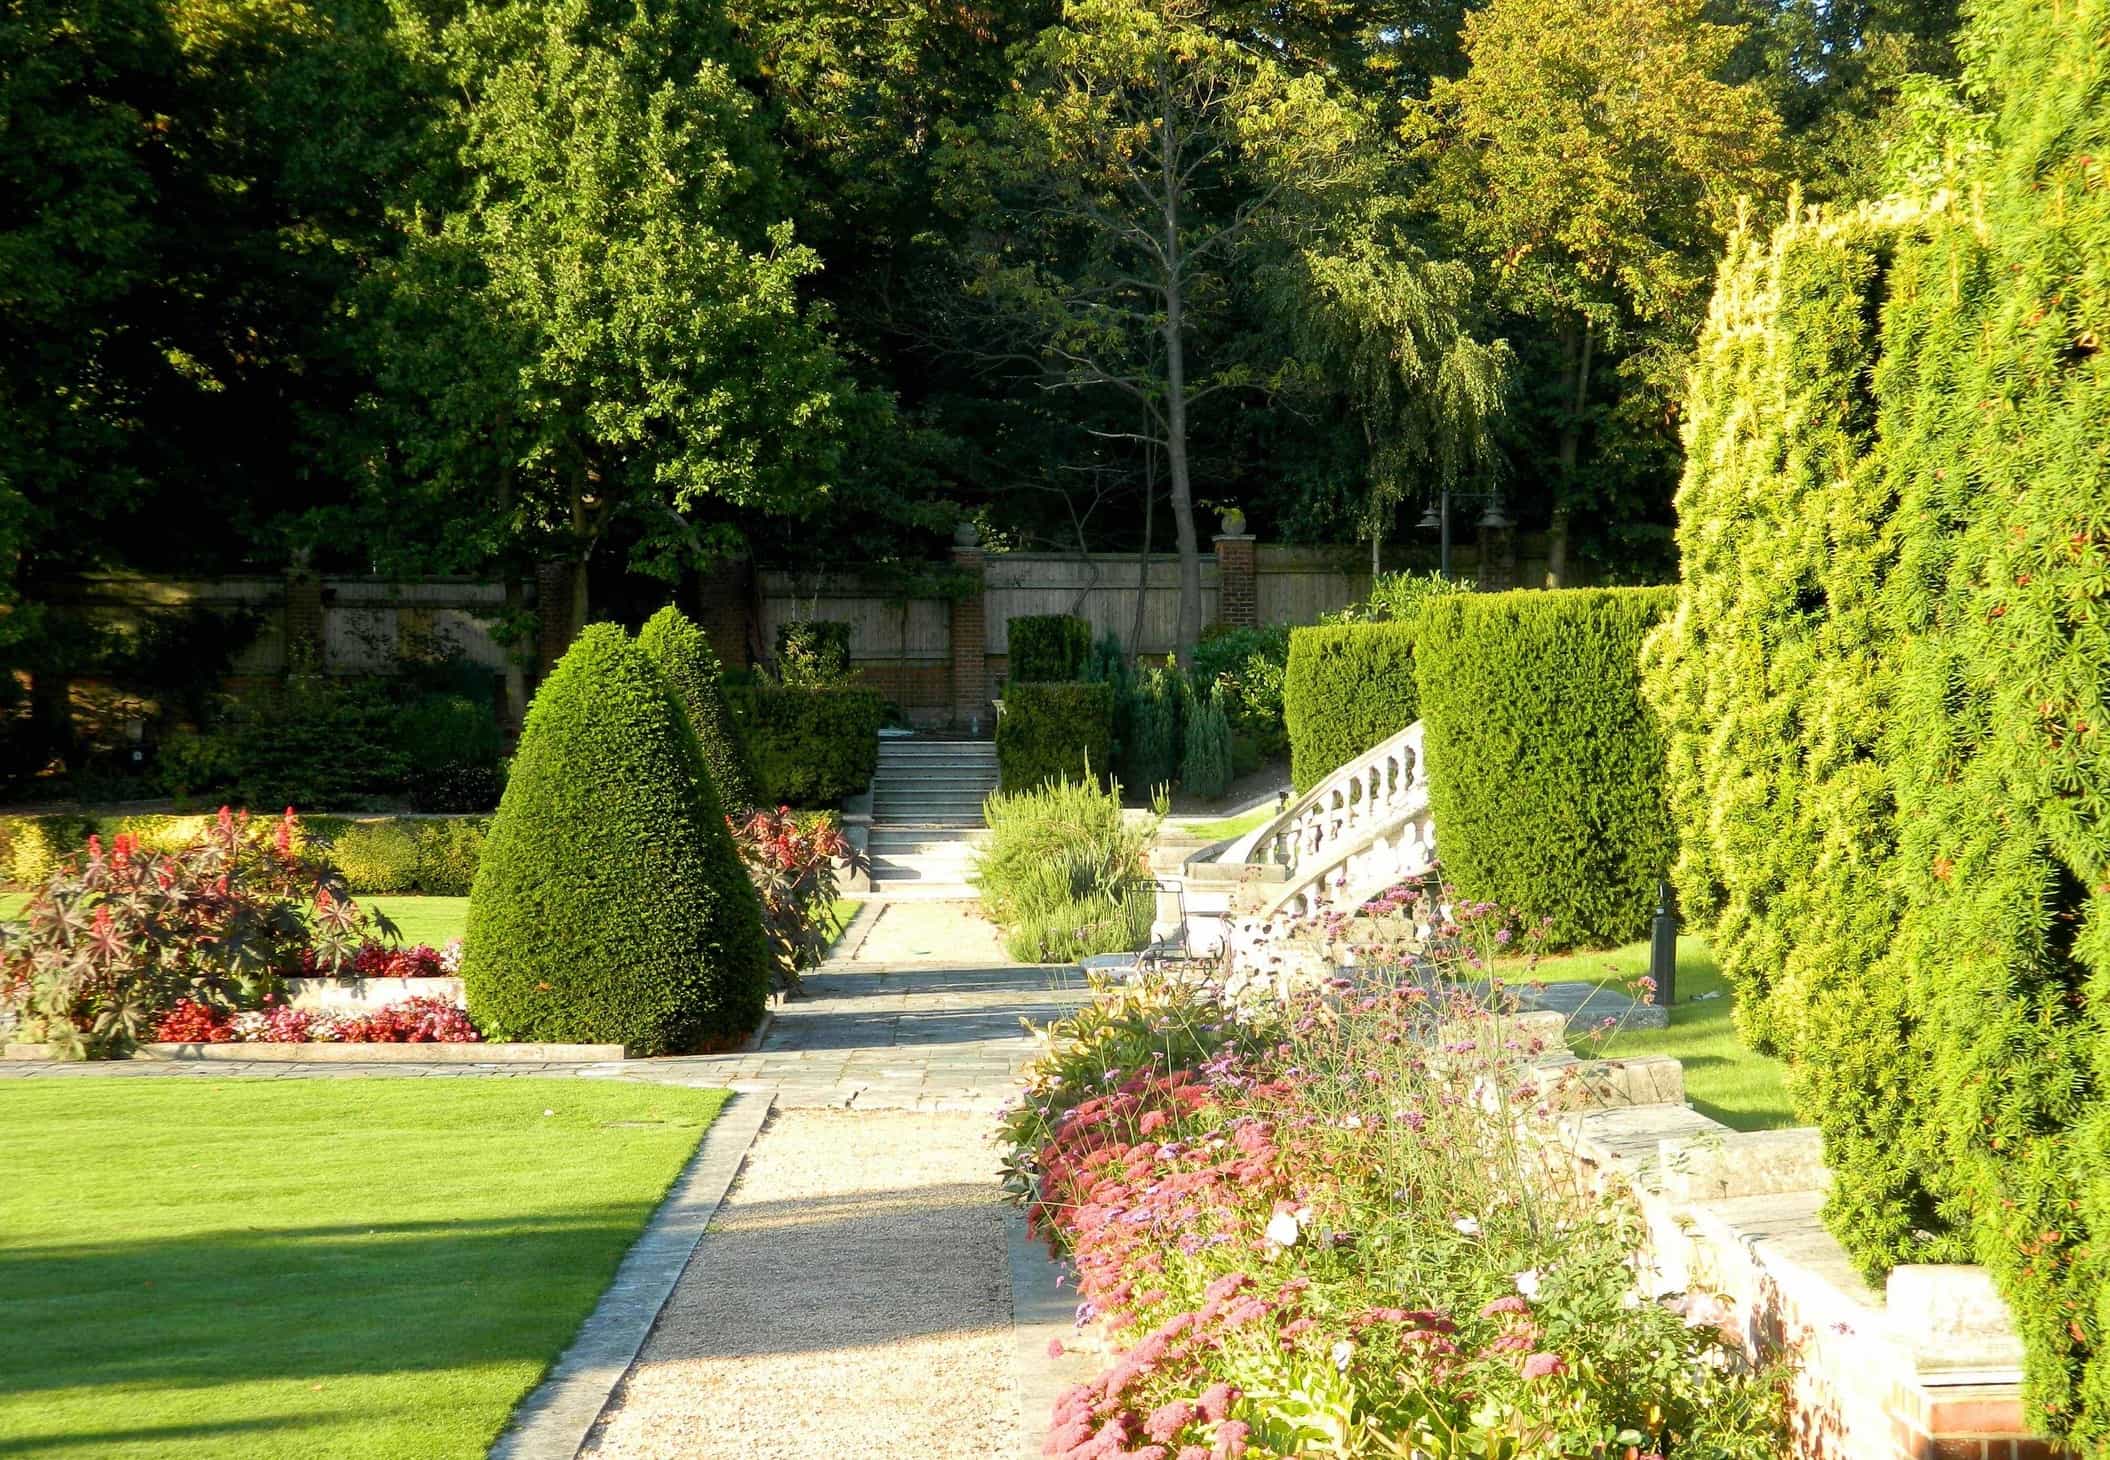 Top 5 Gardens you must visit in UK